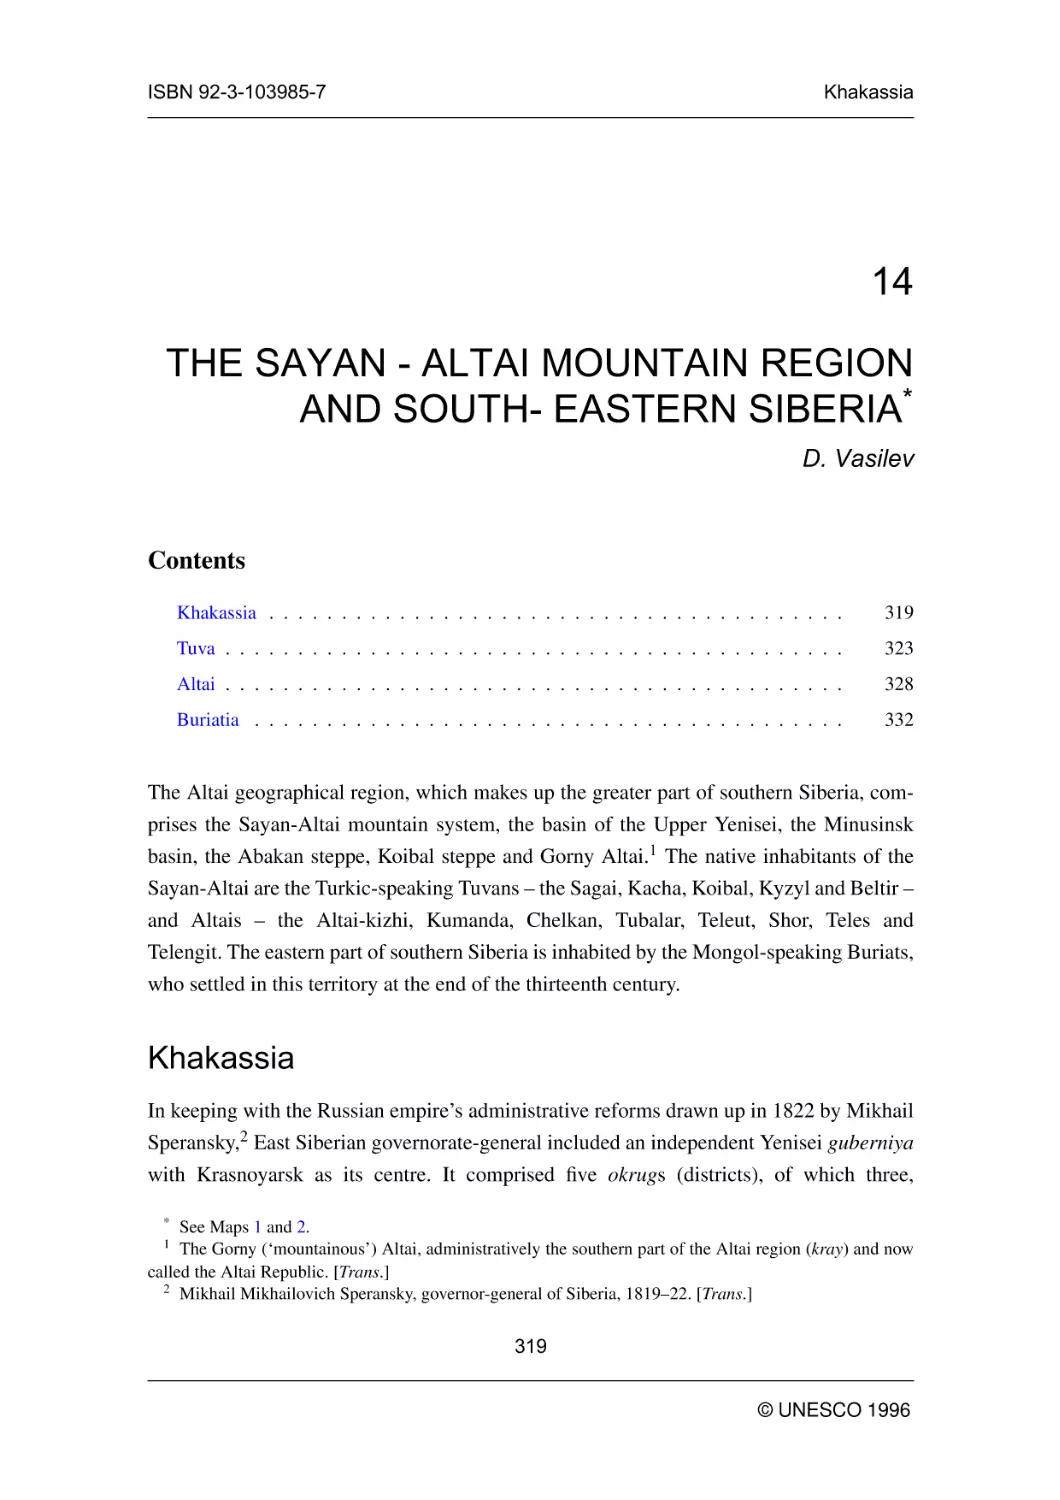 THE SAYAN - ALTAI MOUNTAIN REGION AND SOUTH- EASTERN SIBERIA